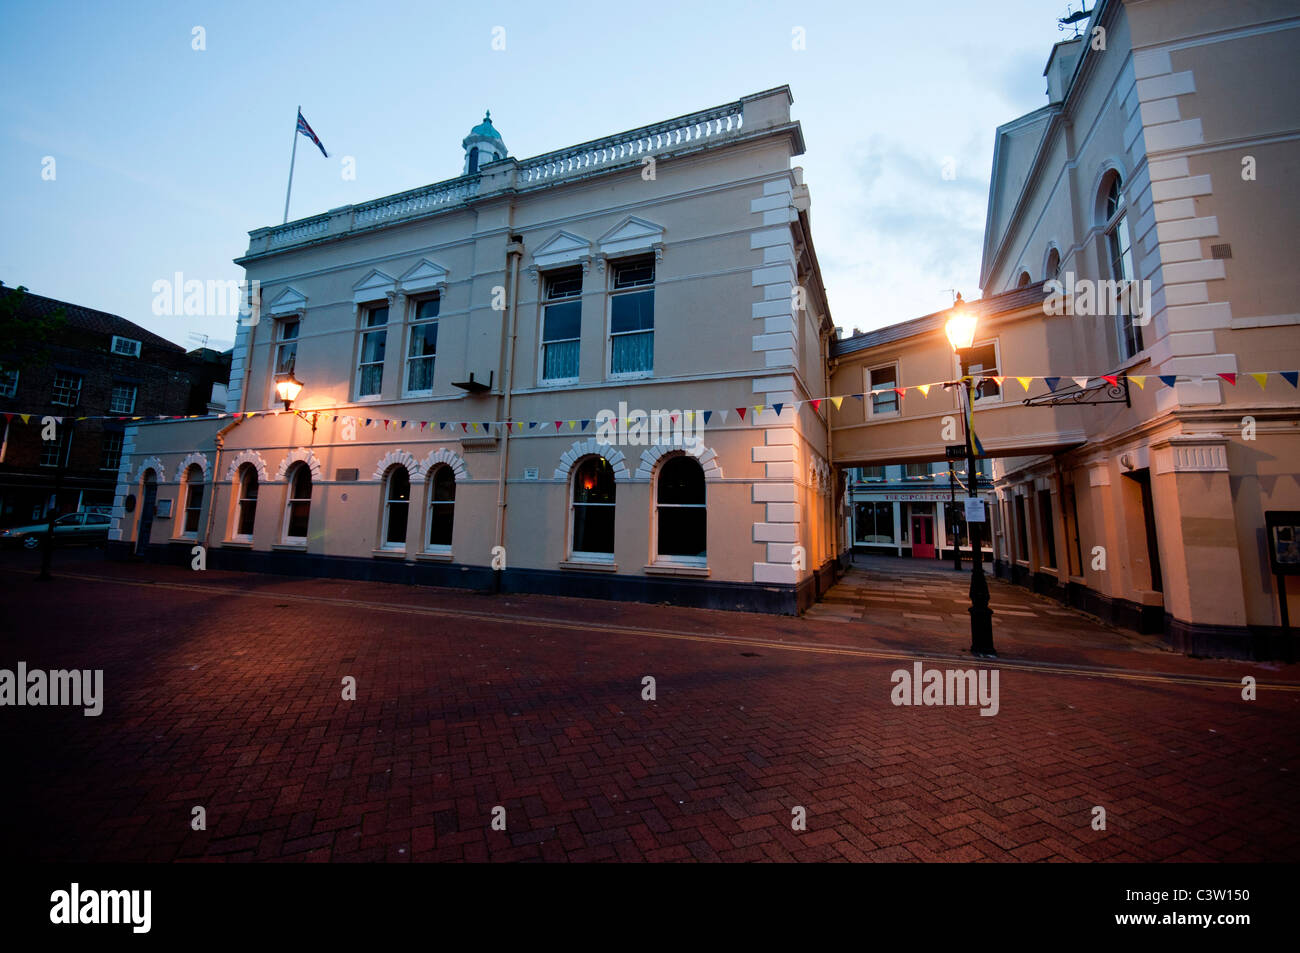 Market street Margate isola di Thanet Kent England Regno Unito città balneare architettura vittoriana Foto Stock